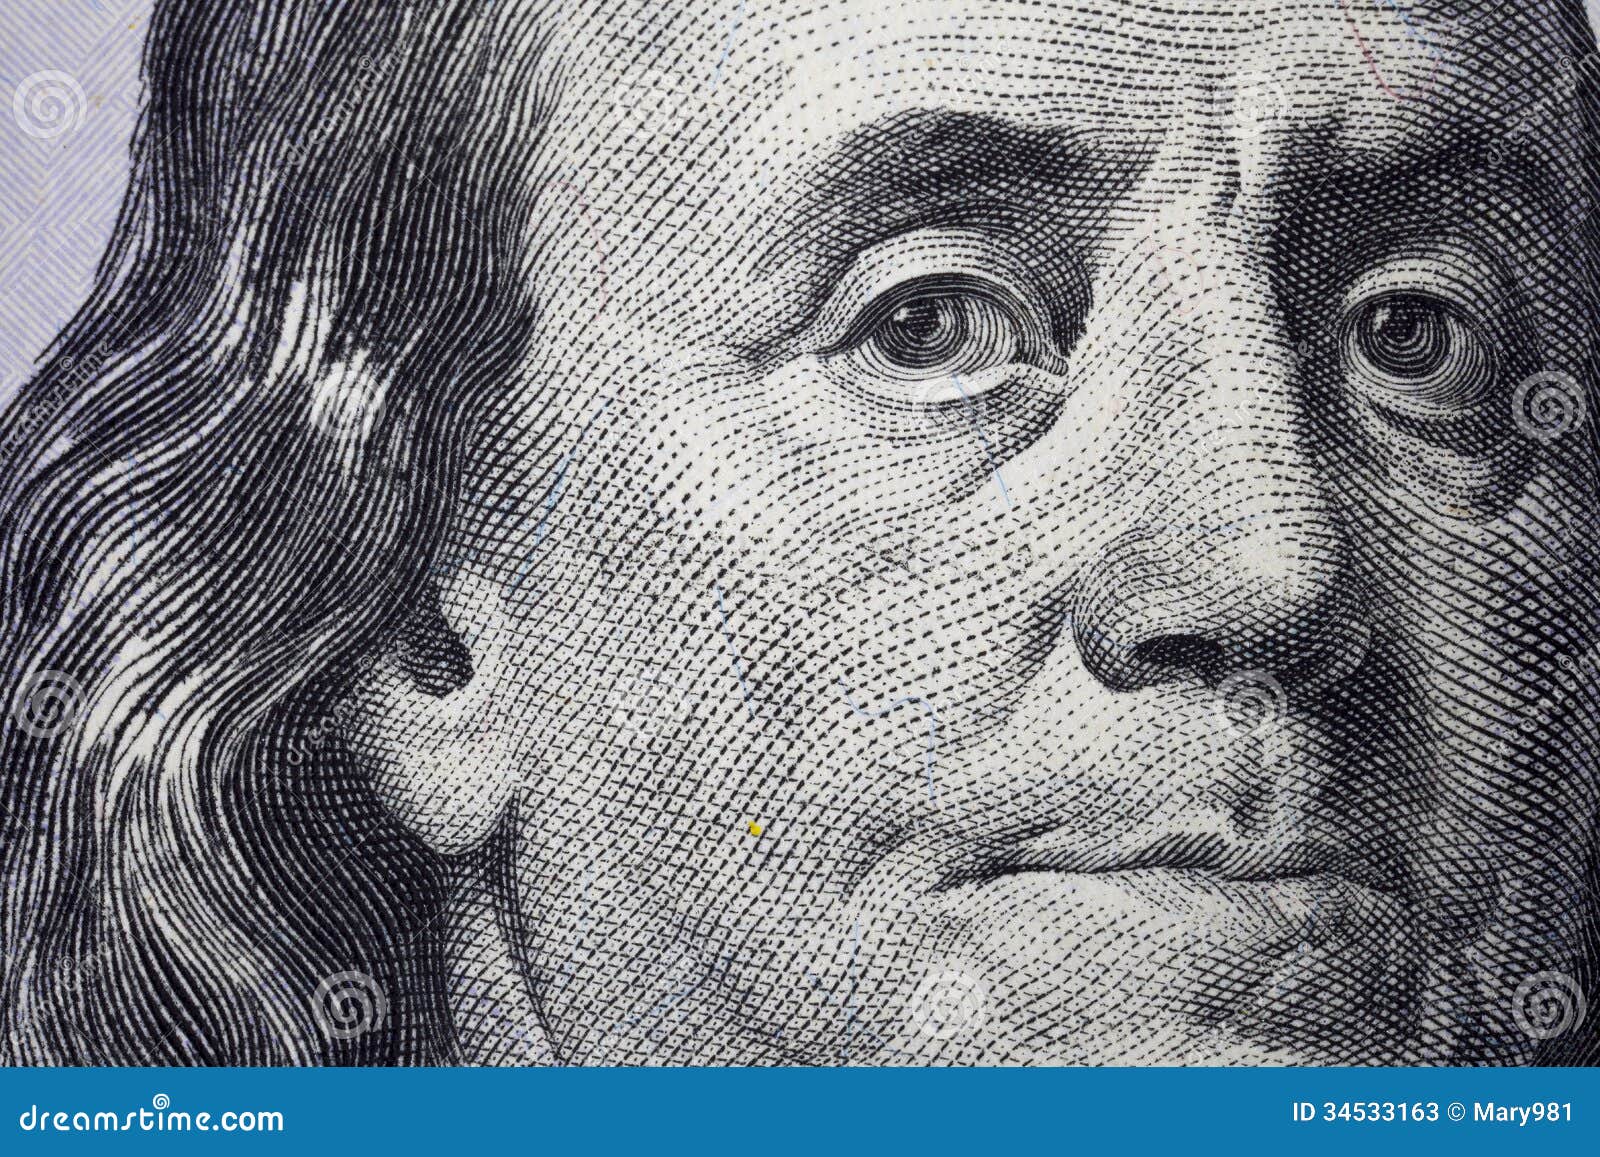 Macro closeup of Benjamin Franklin on the new 100 dollar bill USA. - new-dollar-bill-us-currency-macro-closeup-benjamin-franklin-usa-34533163